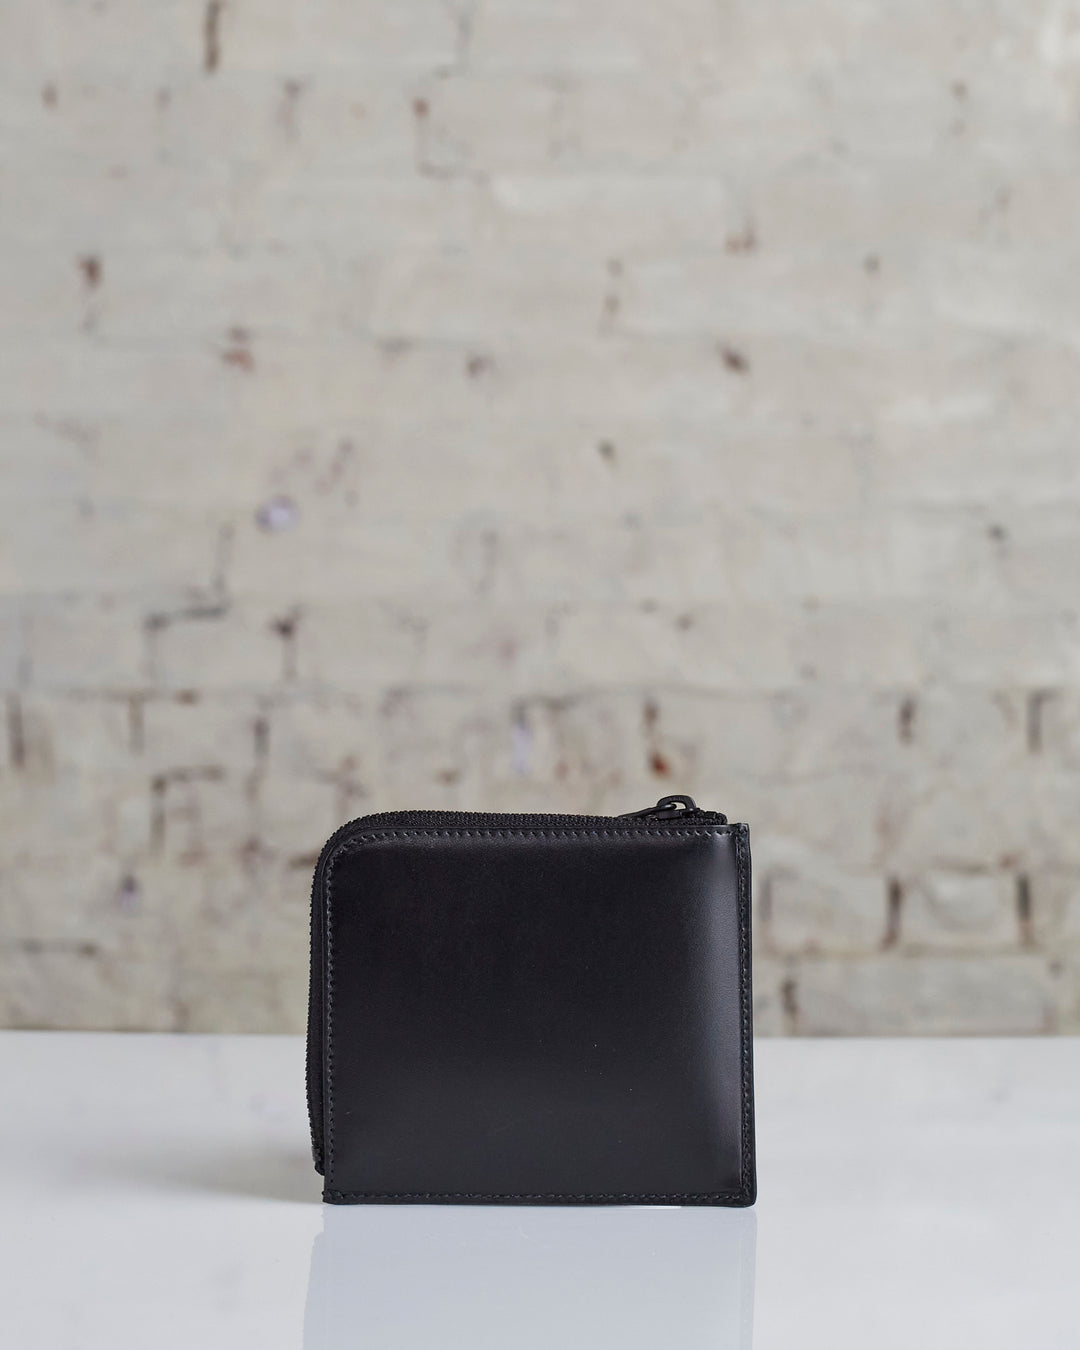 Comme des Garçons Wallet Very Black Leather Line Zip Wallet